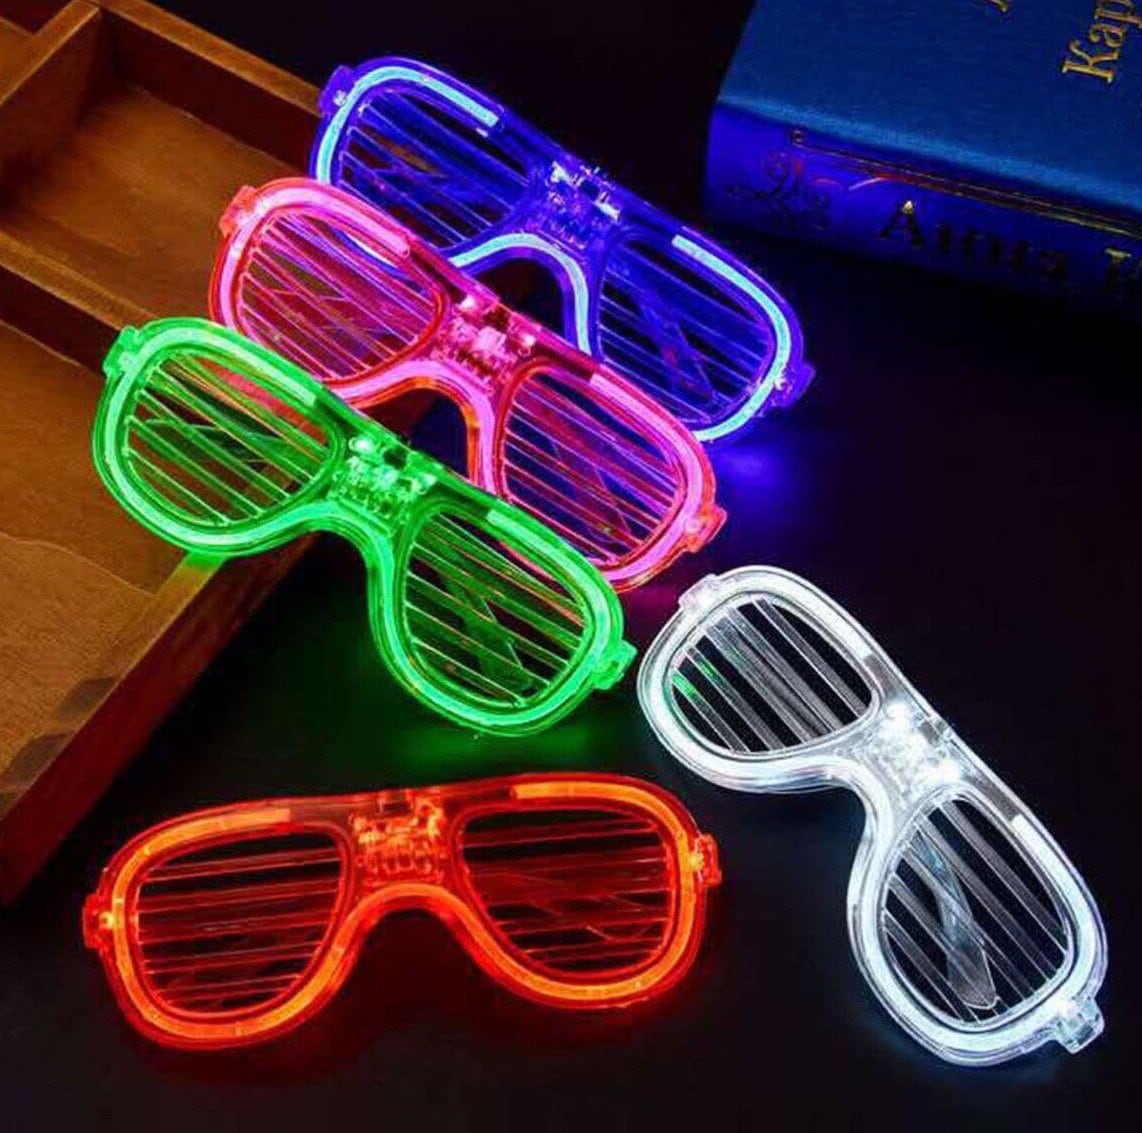 LED Festival Glasses, Rechargeable LED Glasses, Rave Glasses, Party Glasses  